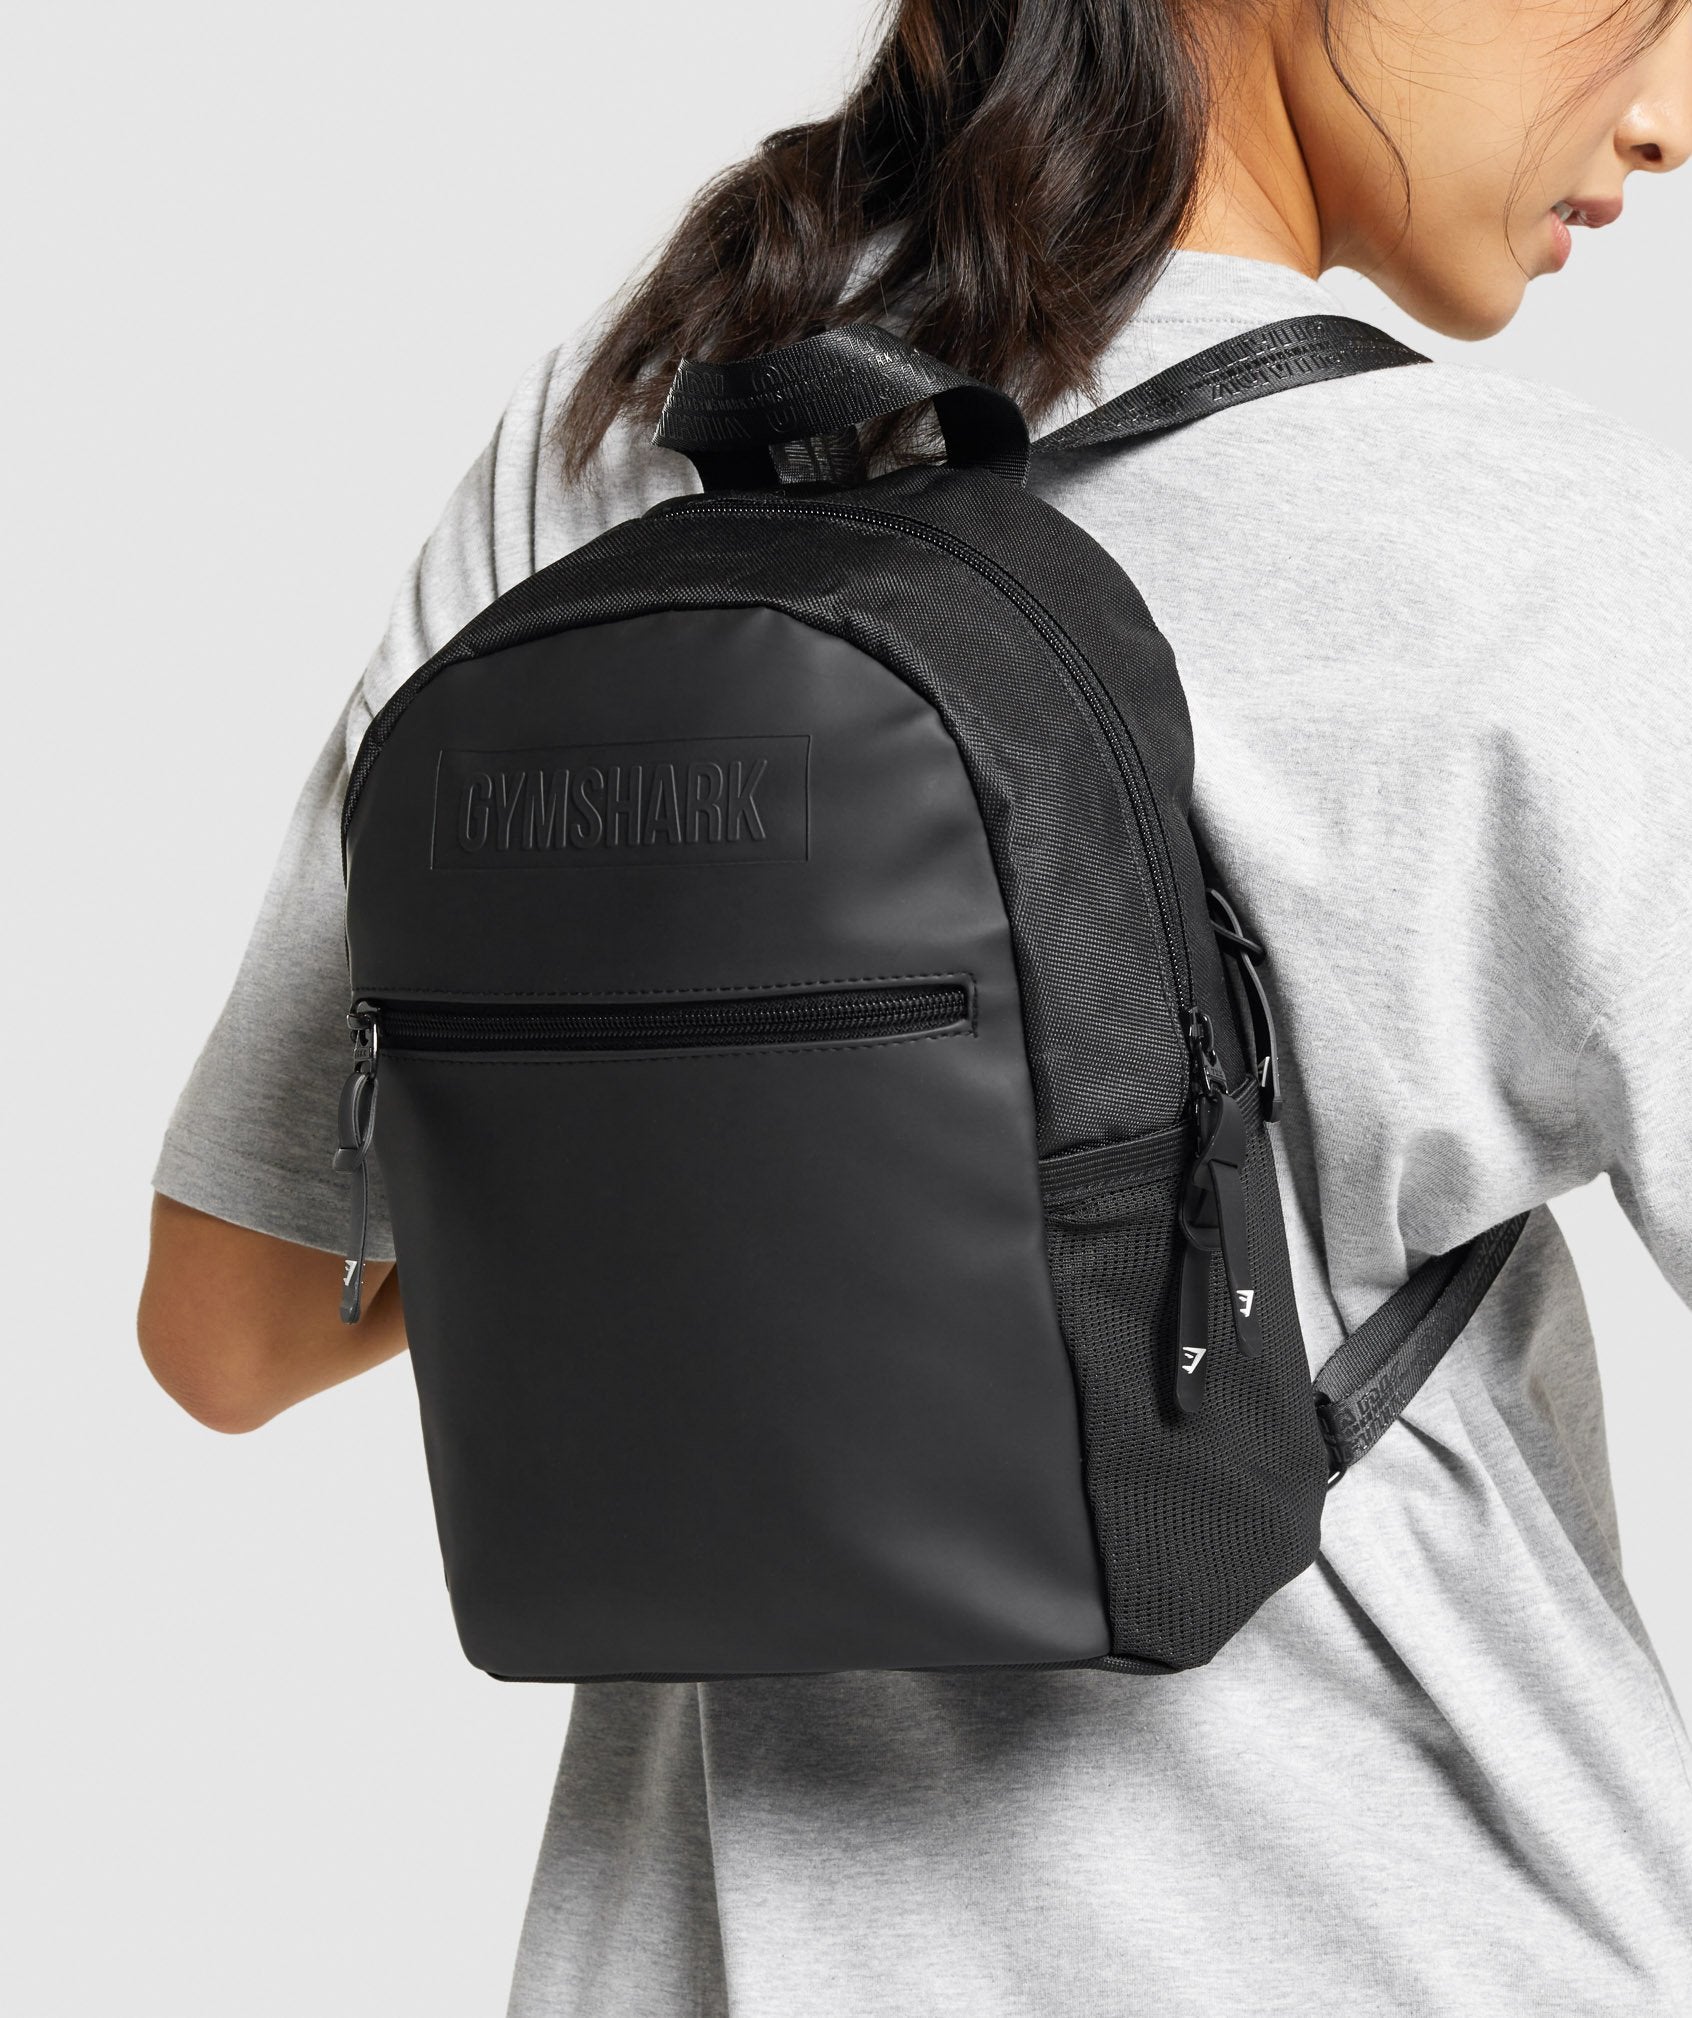 gymshark Black Everyday Mini Backpack One Size